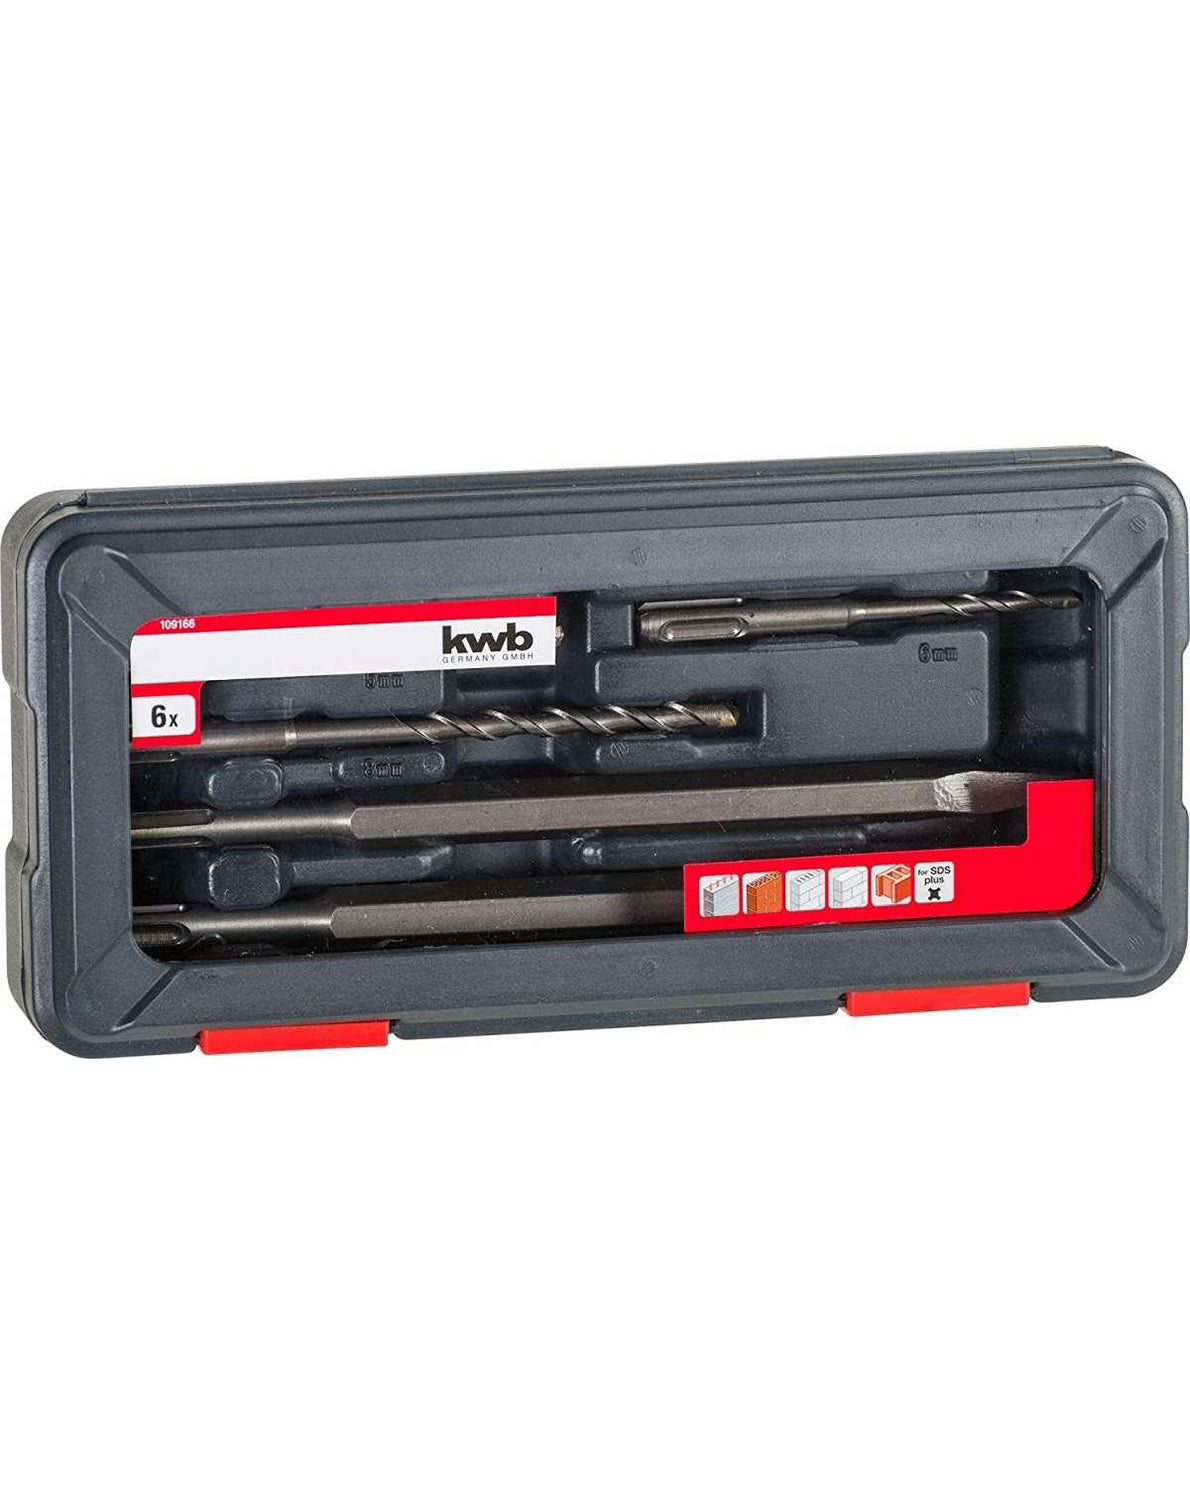 KWB - EINHELL - Power Box per martello e scalpello set - (Art. 109166) Amorelegnami